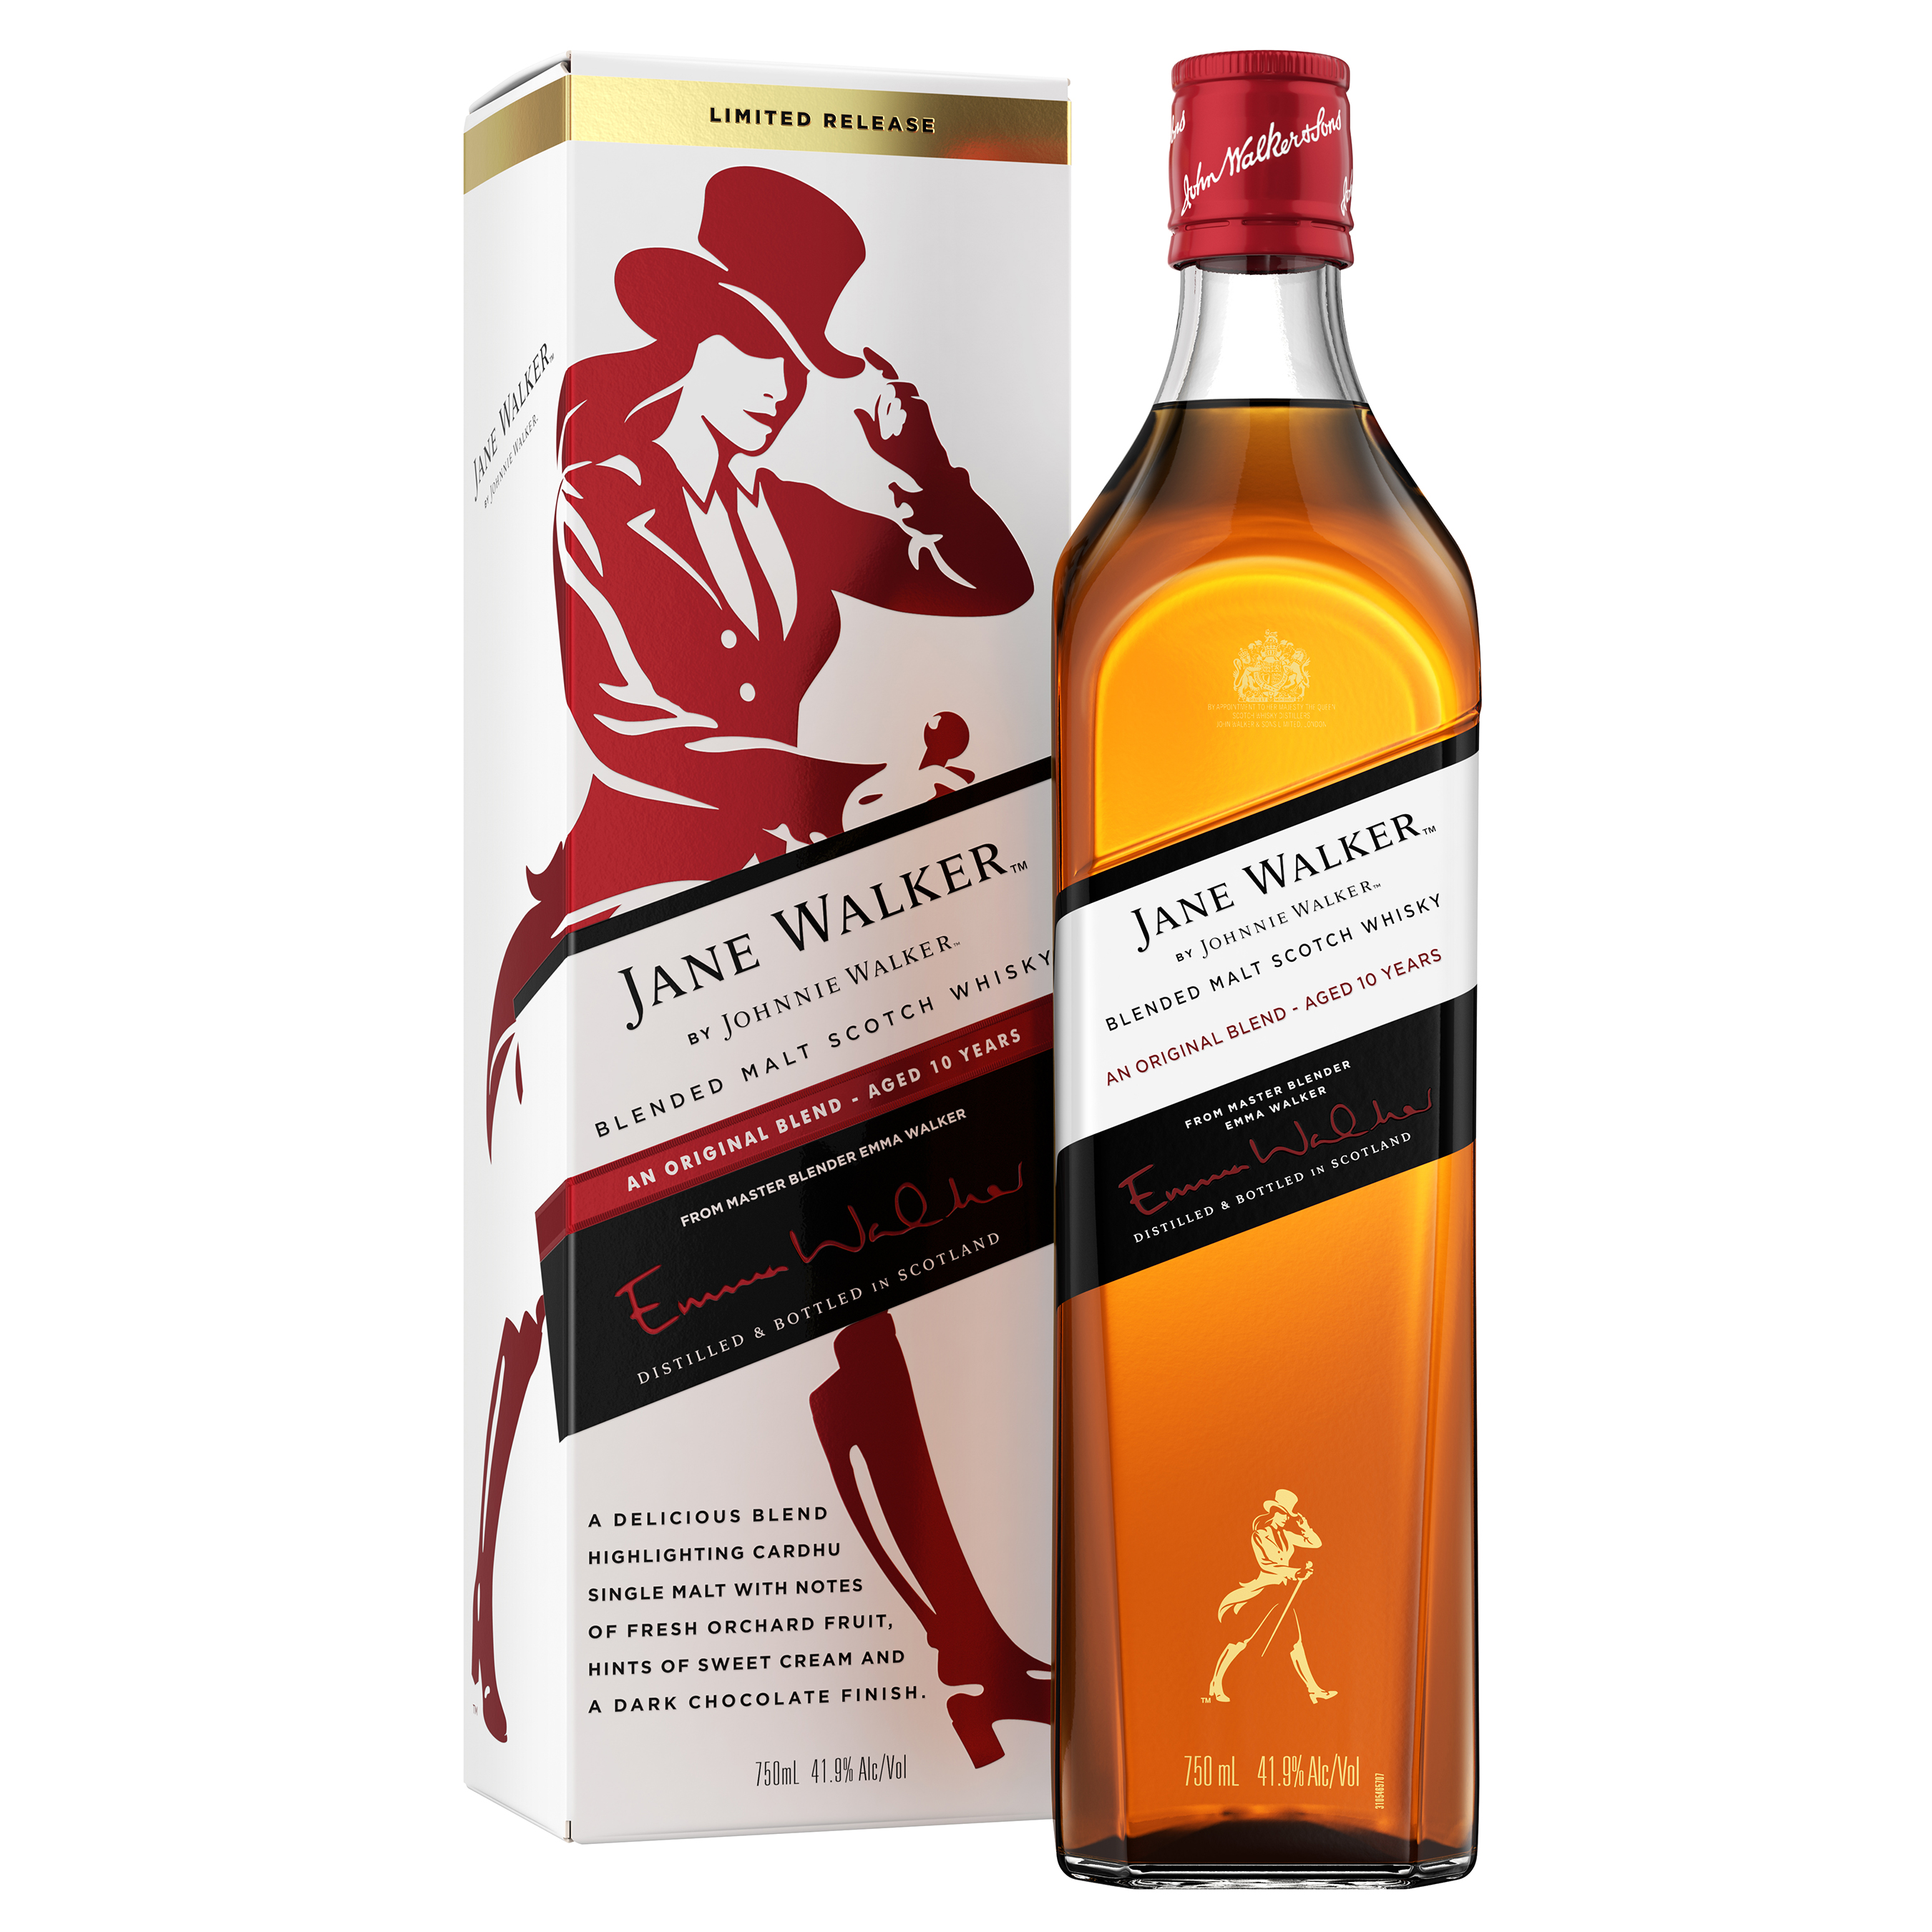 The new Jane Walker by Johnnie Walker from Master Blender Emma Walker is a Blended Malt Scotch Whisky aged ten years.